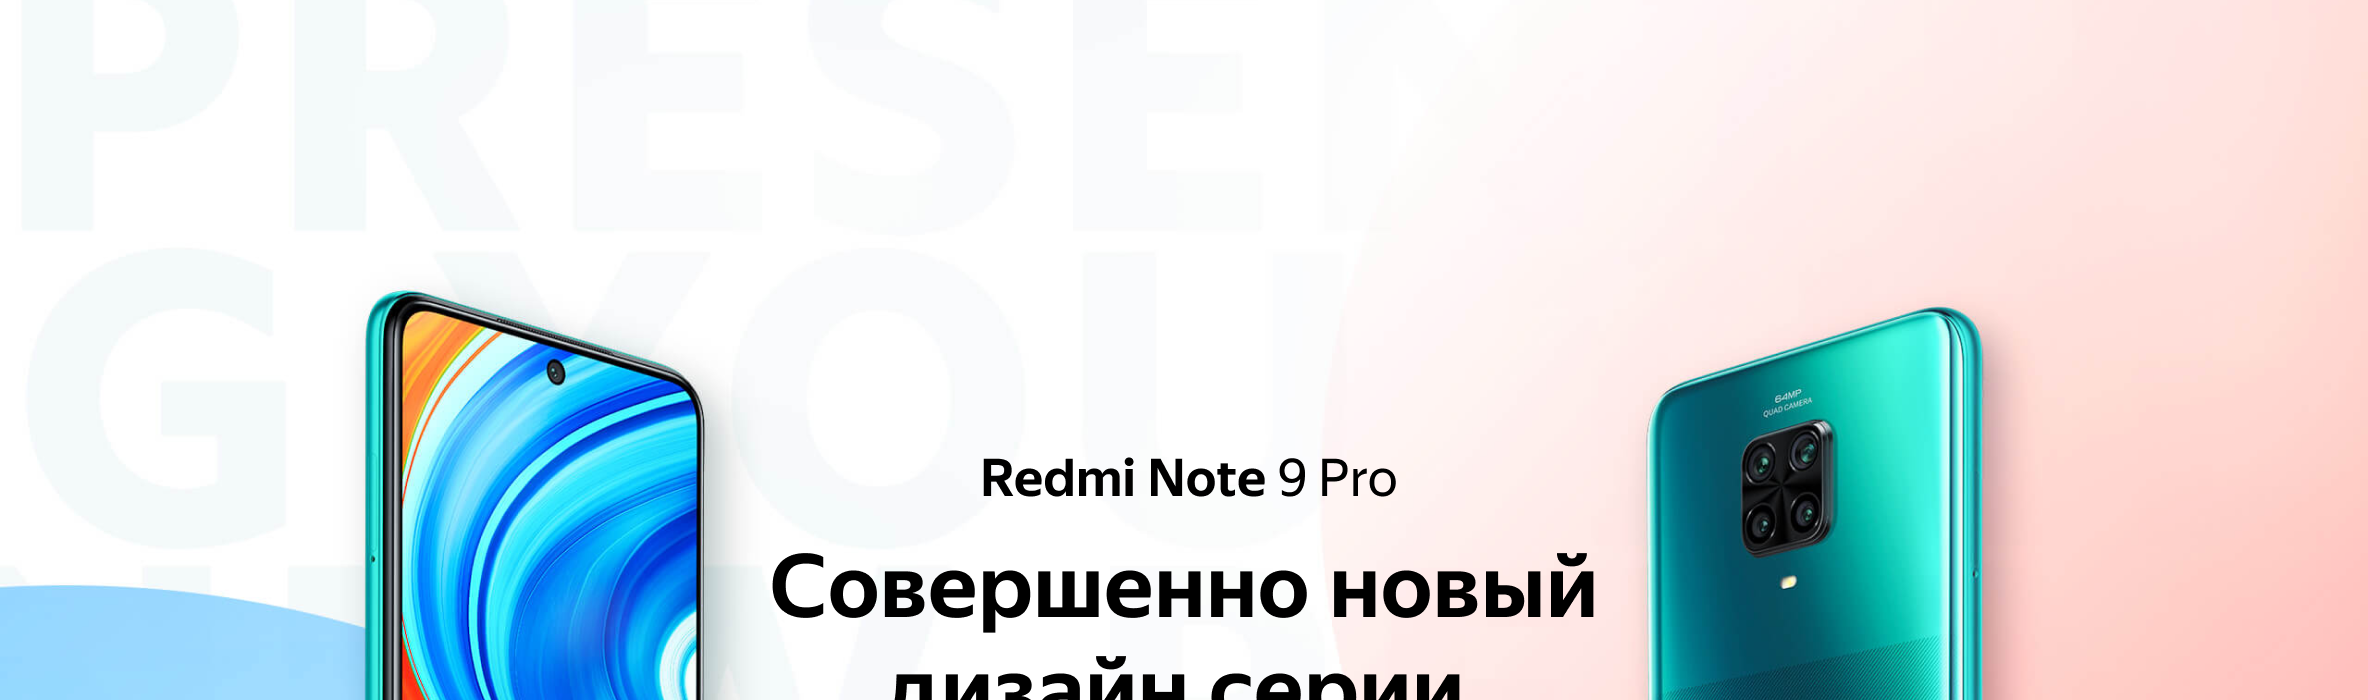 Redmi Note 9 Pro 6/128 Gb gray - paragraf.uz